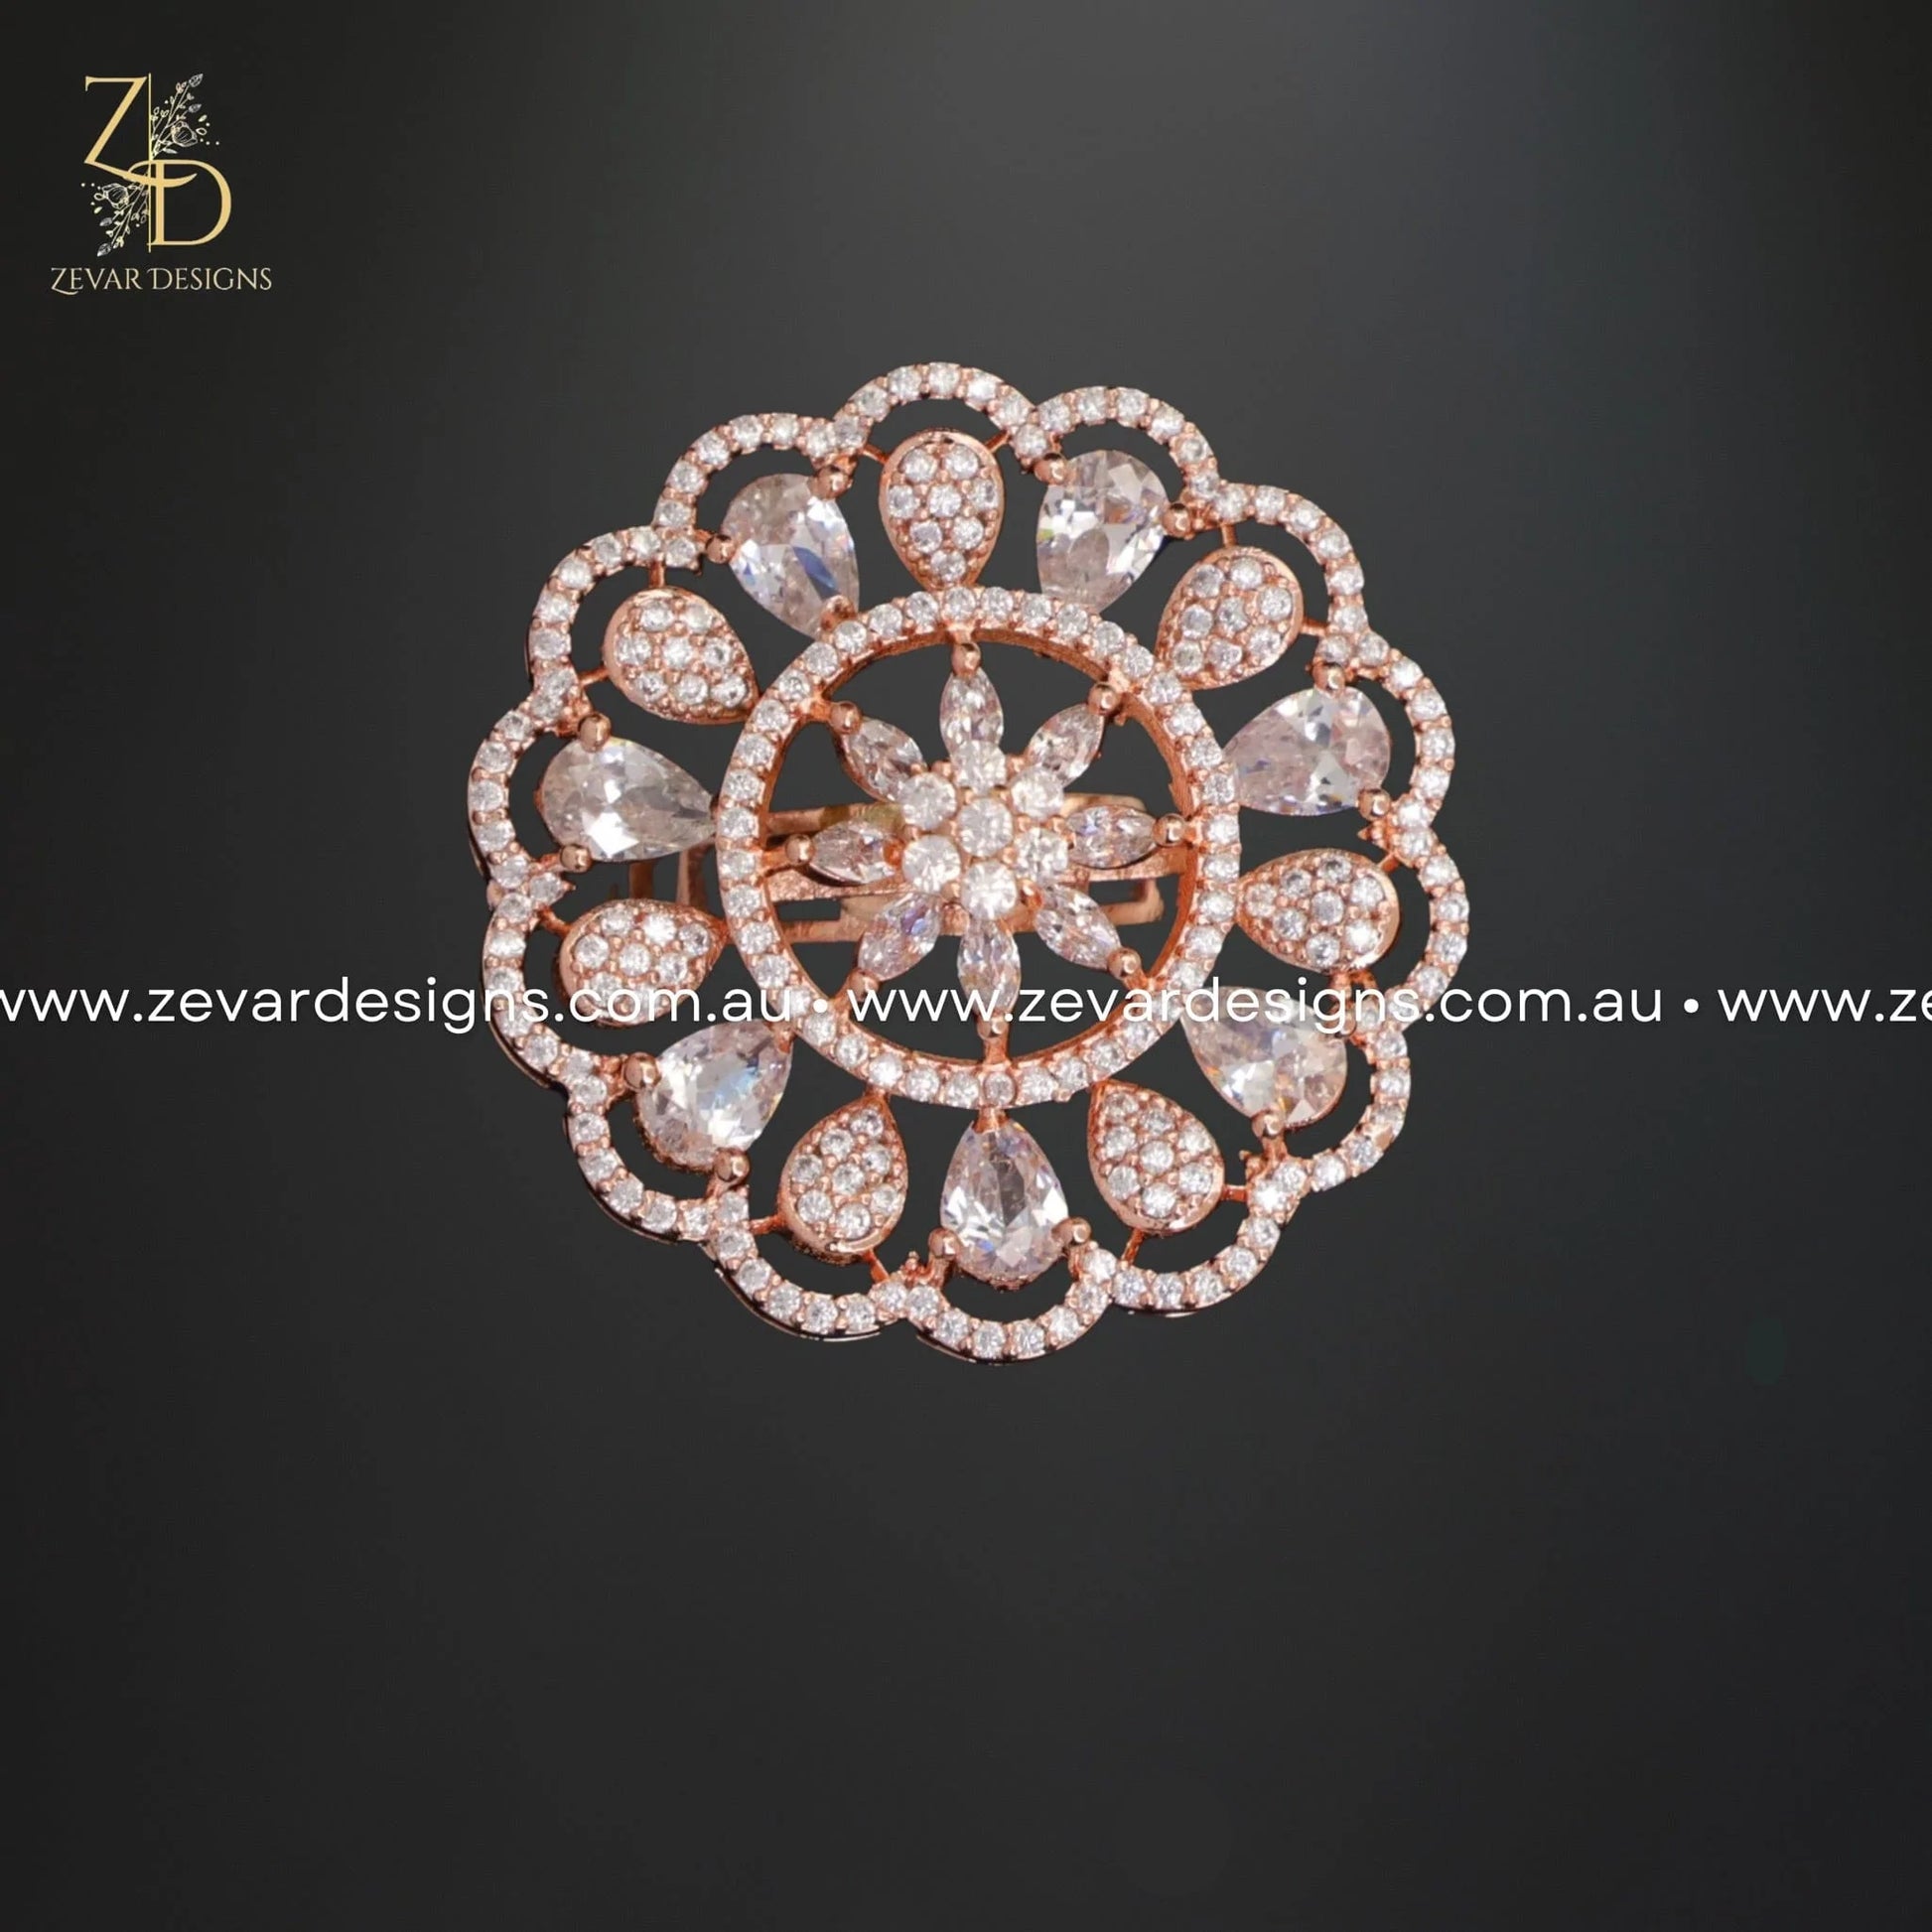 Zevar Designs Rings - AD AD/Zircon Ring in Rose Gold